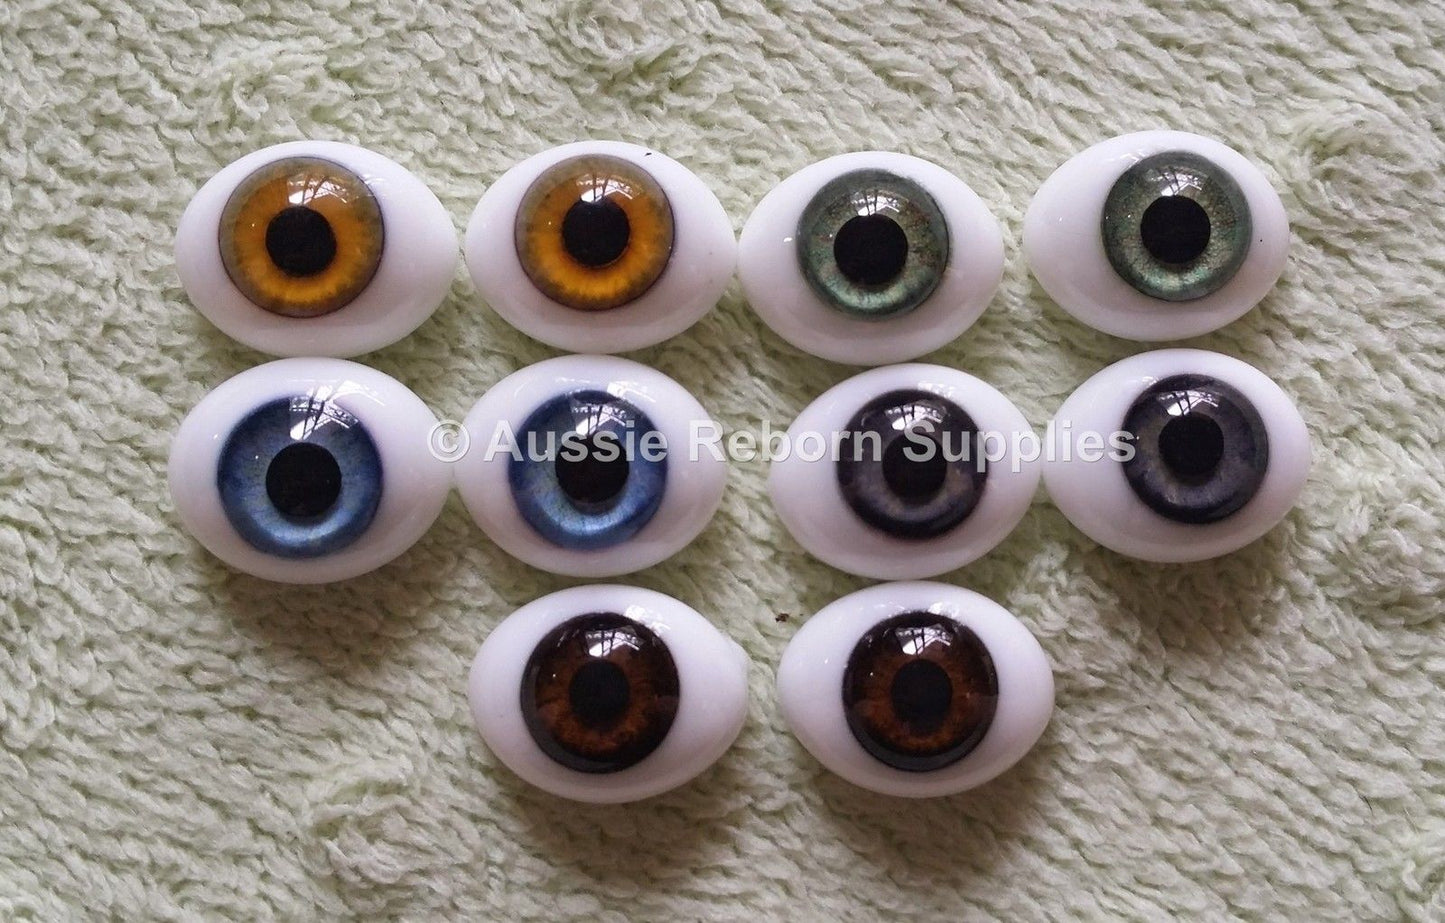 18mm Hazel Oval Glass Eyes Reborn Baby Doll Making Supplies